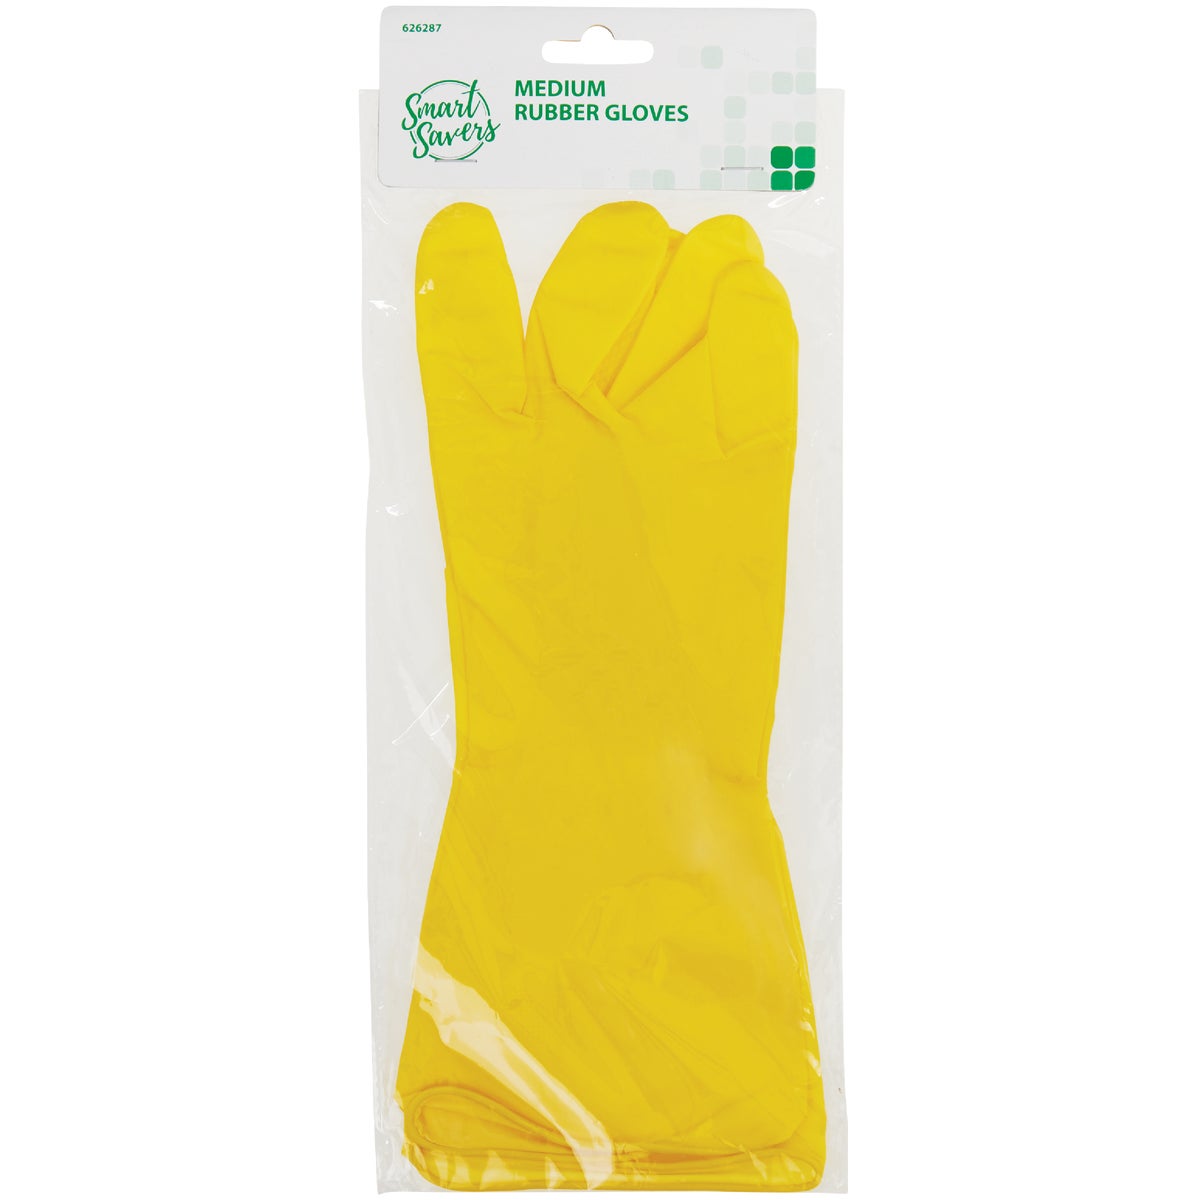 Item 626287, Smart Savers rubber kitchen gloves.